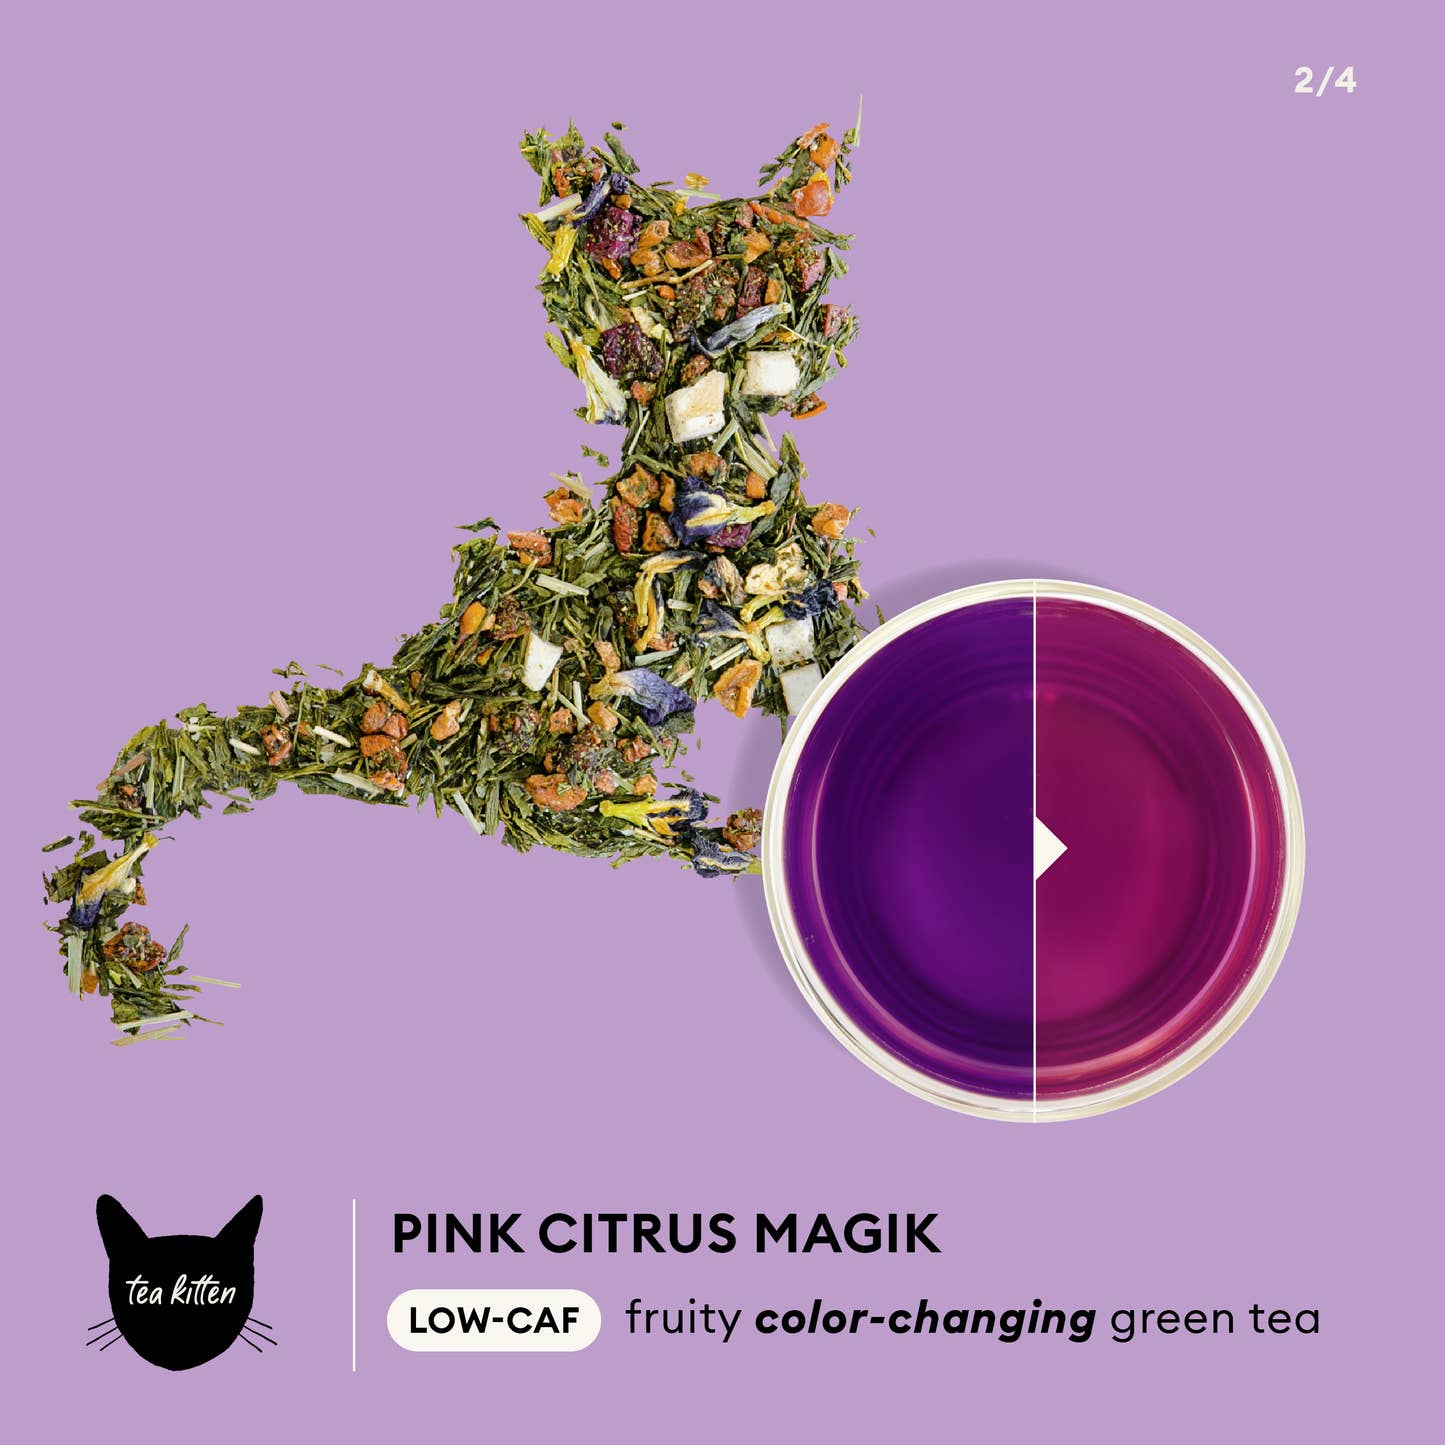 Tea Kitten - Pink Citrus Magik low-caf, fruity color-changing tea infographic